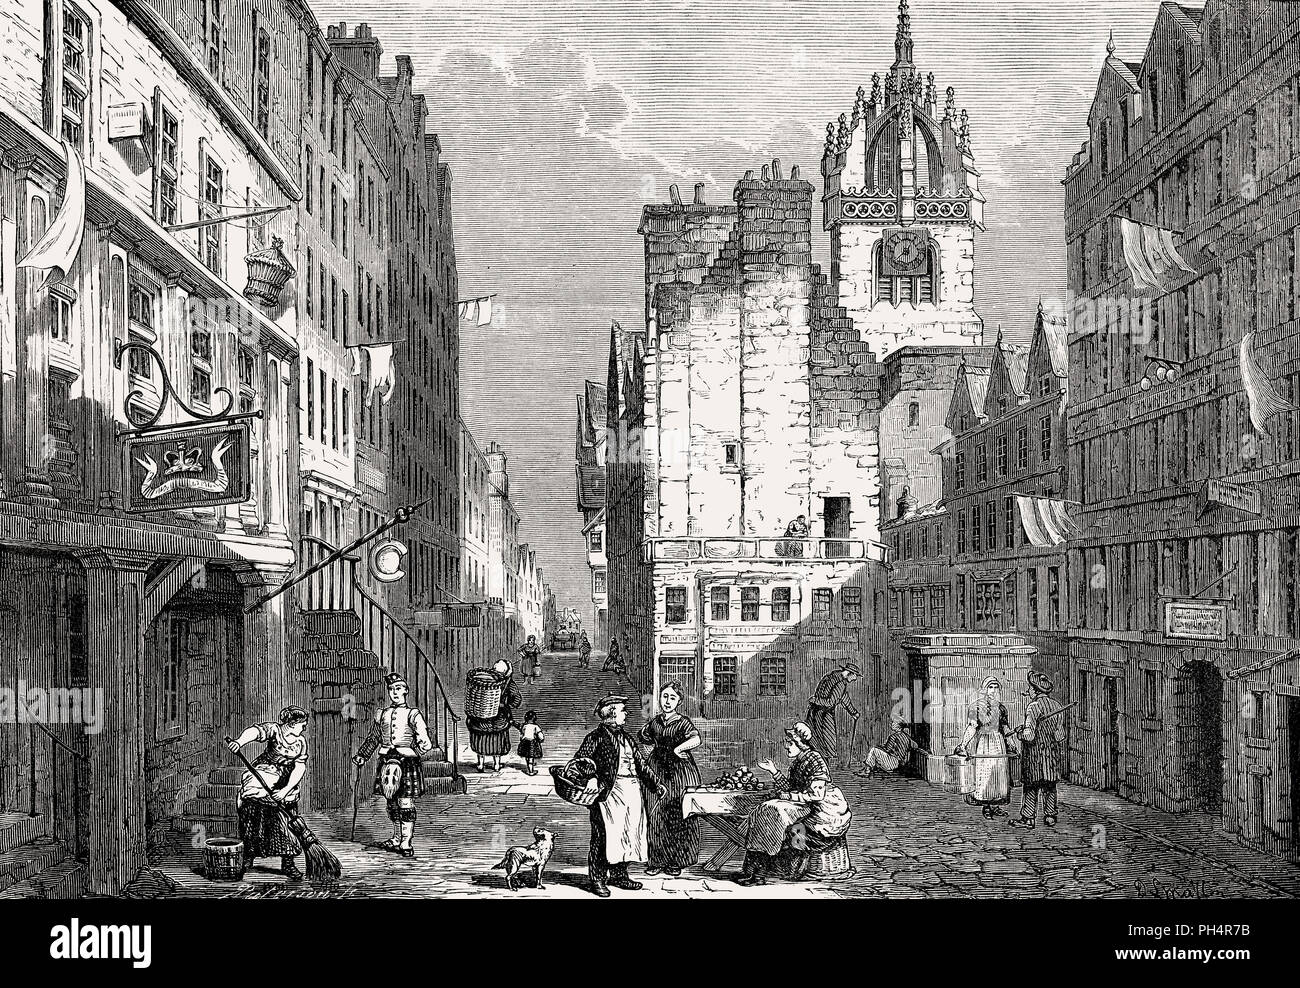 The 'Heart of Midlothian', High Street, Royal Mile in Edinburgh, Scotland, 19th century Stock Photo